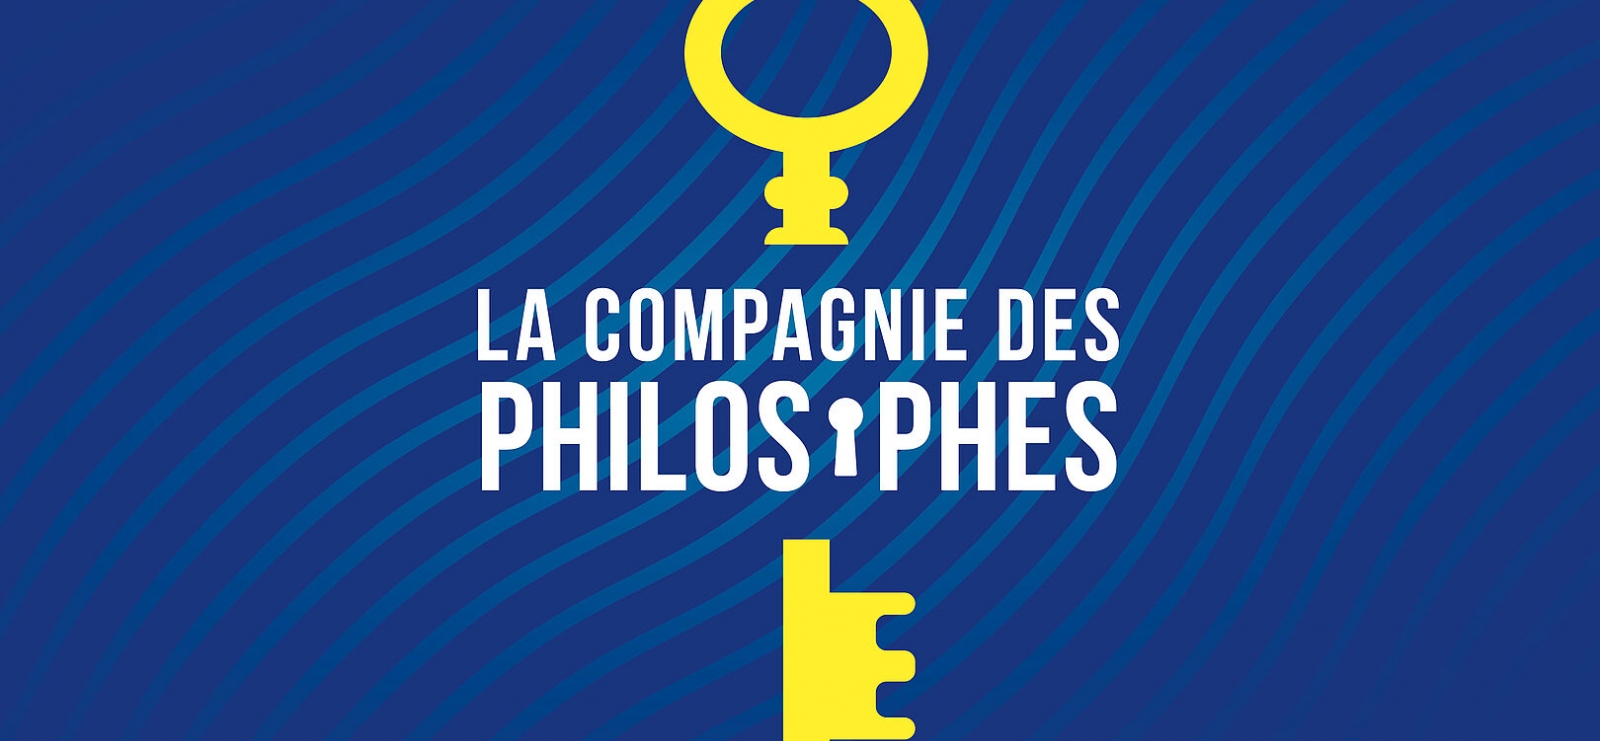 La Compagnie des Philosophes